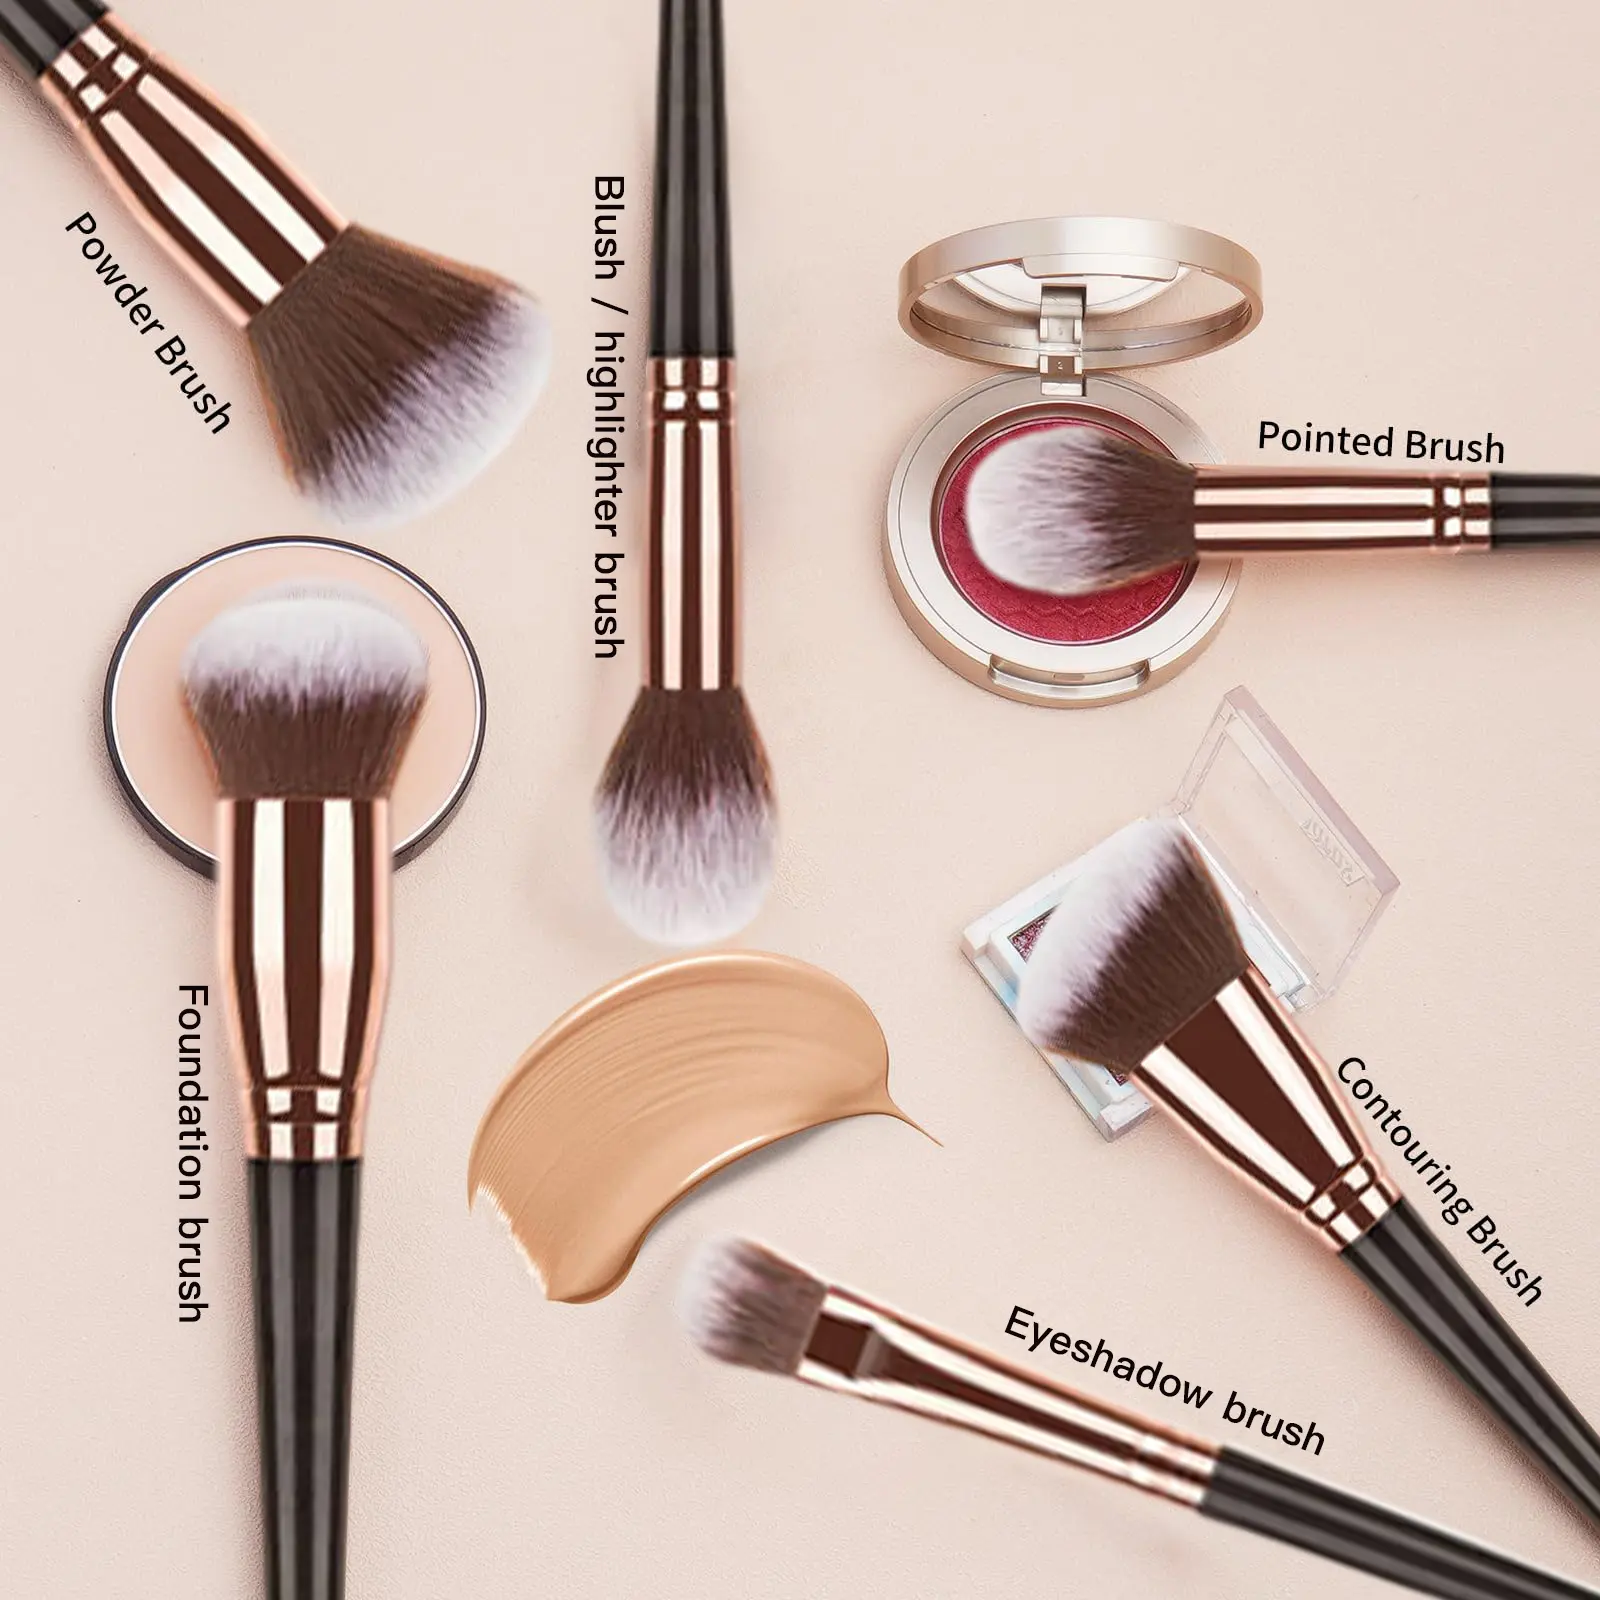 BIG  Professional Maquillaje Tools Synthetic Korean Brown Foundation Eye Makeup Brushes 7/10/15 Pcs Custom Logo Makeup Brush Set